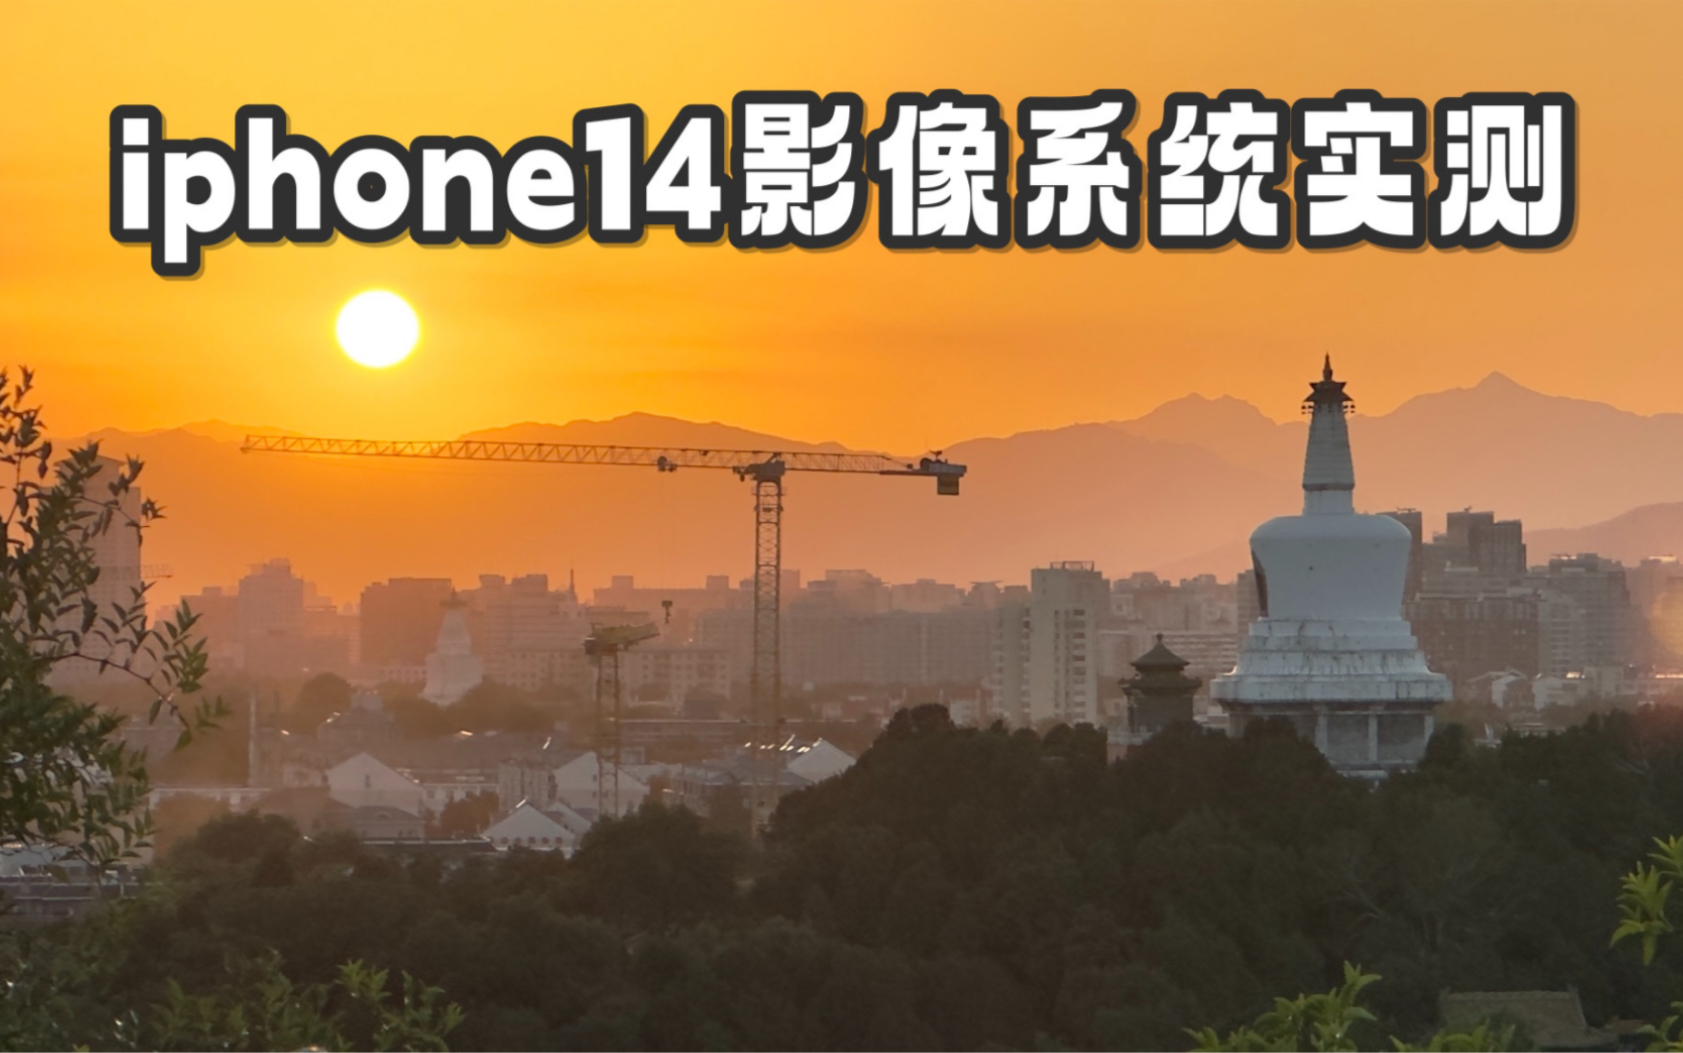 iphone14 pro视频影像能力测试｜北京景山公园、南锣鼓巷全程记录｜